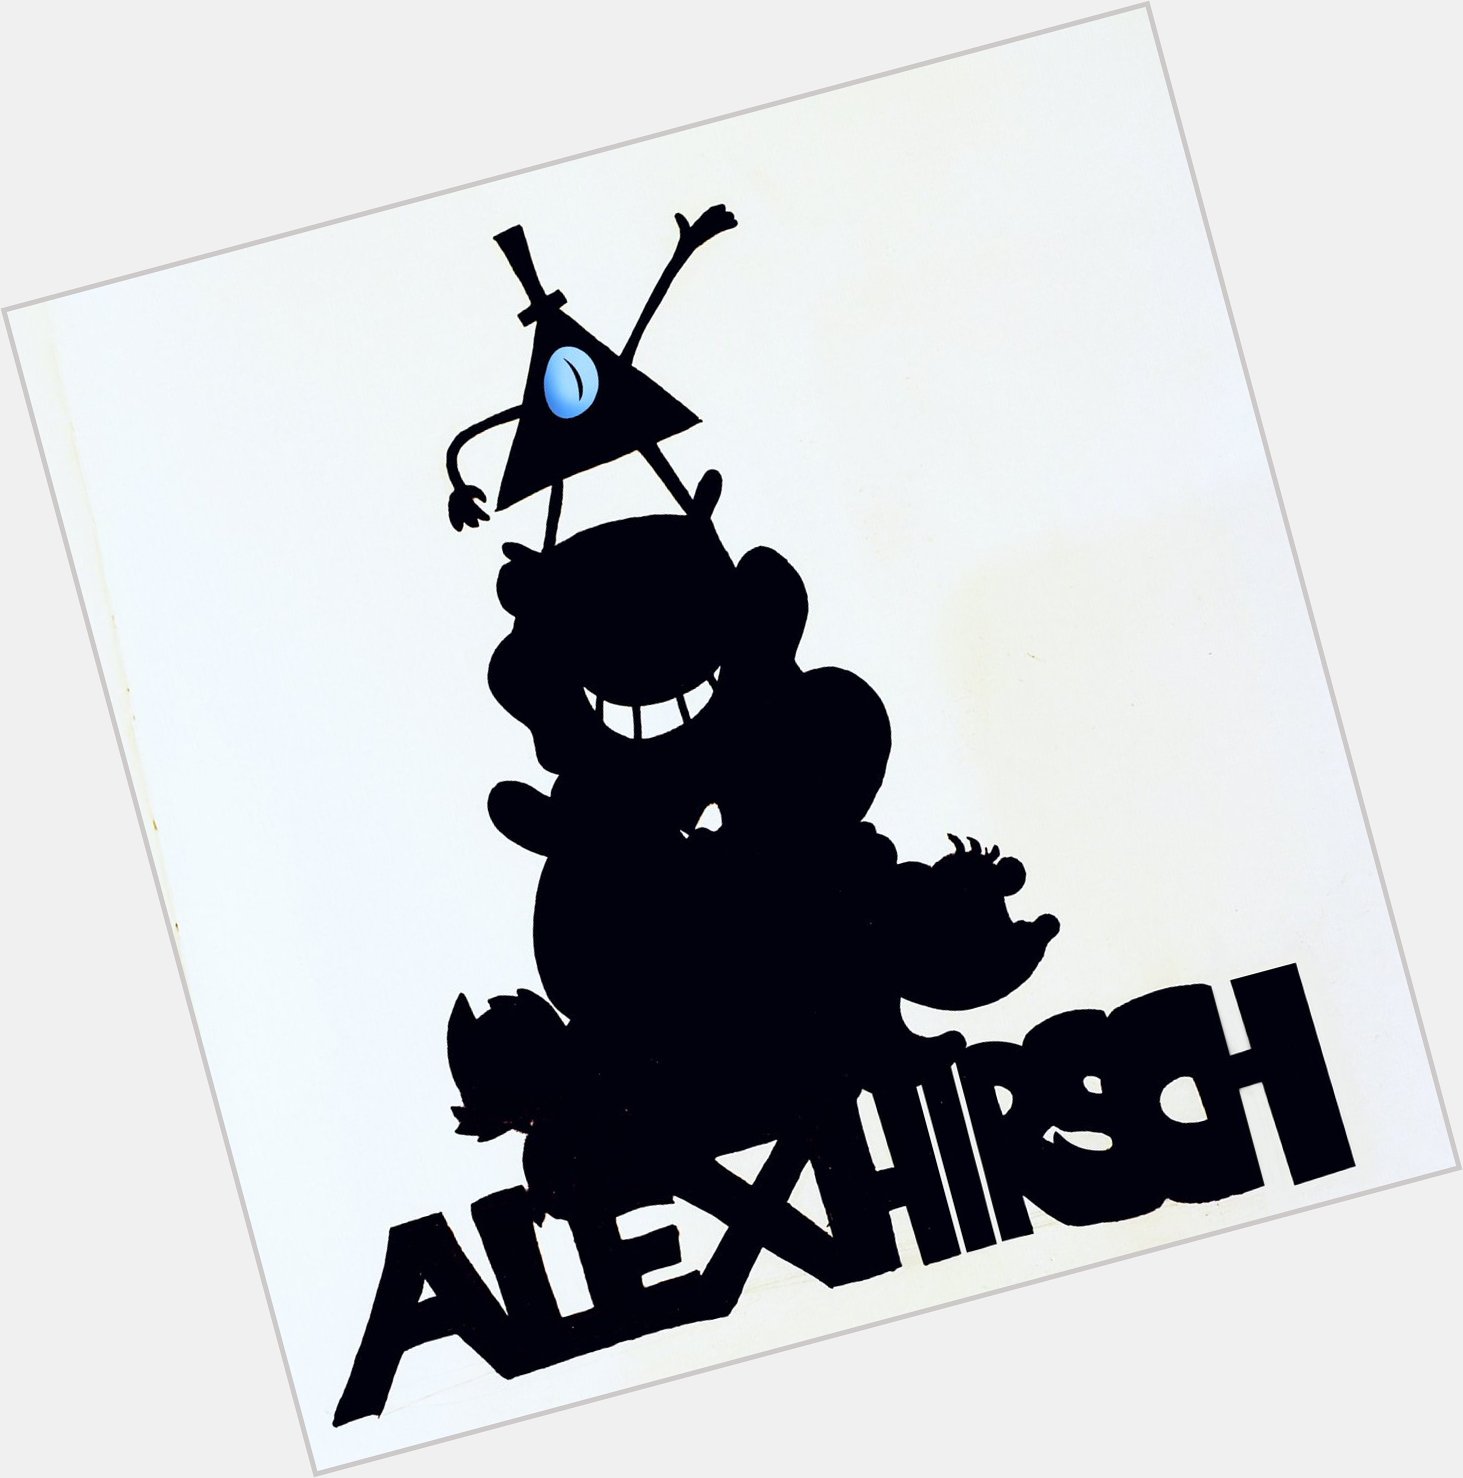 Tribute to Alex Hirsch. Happy belated birthday! 